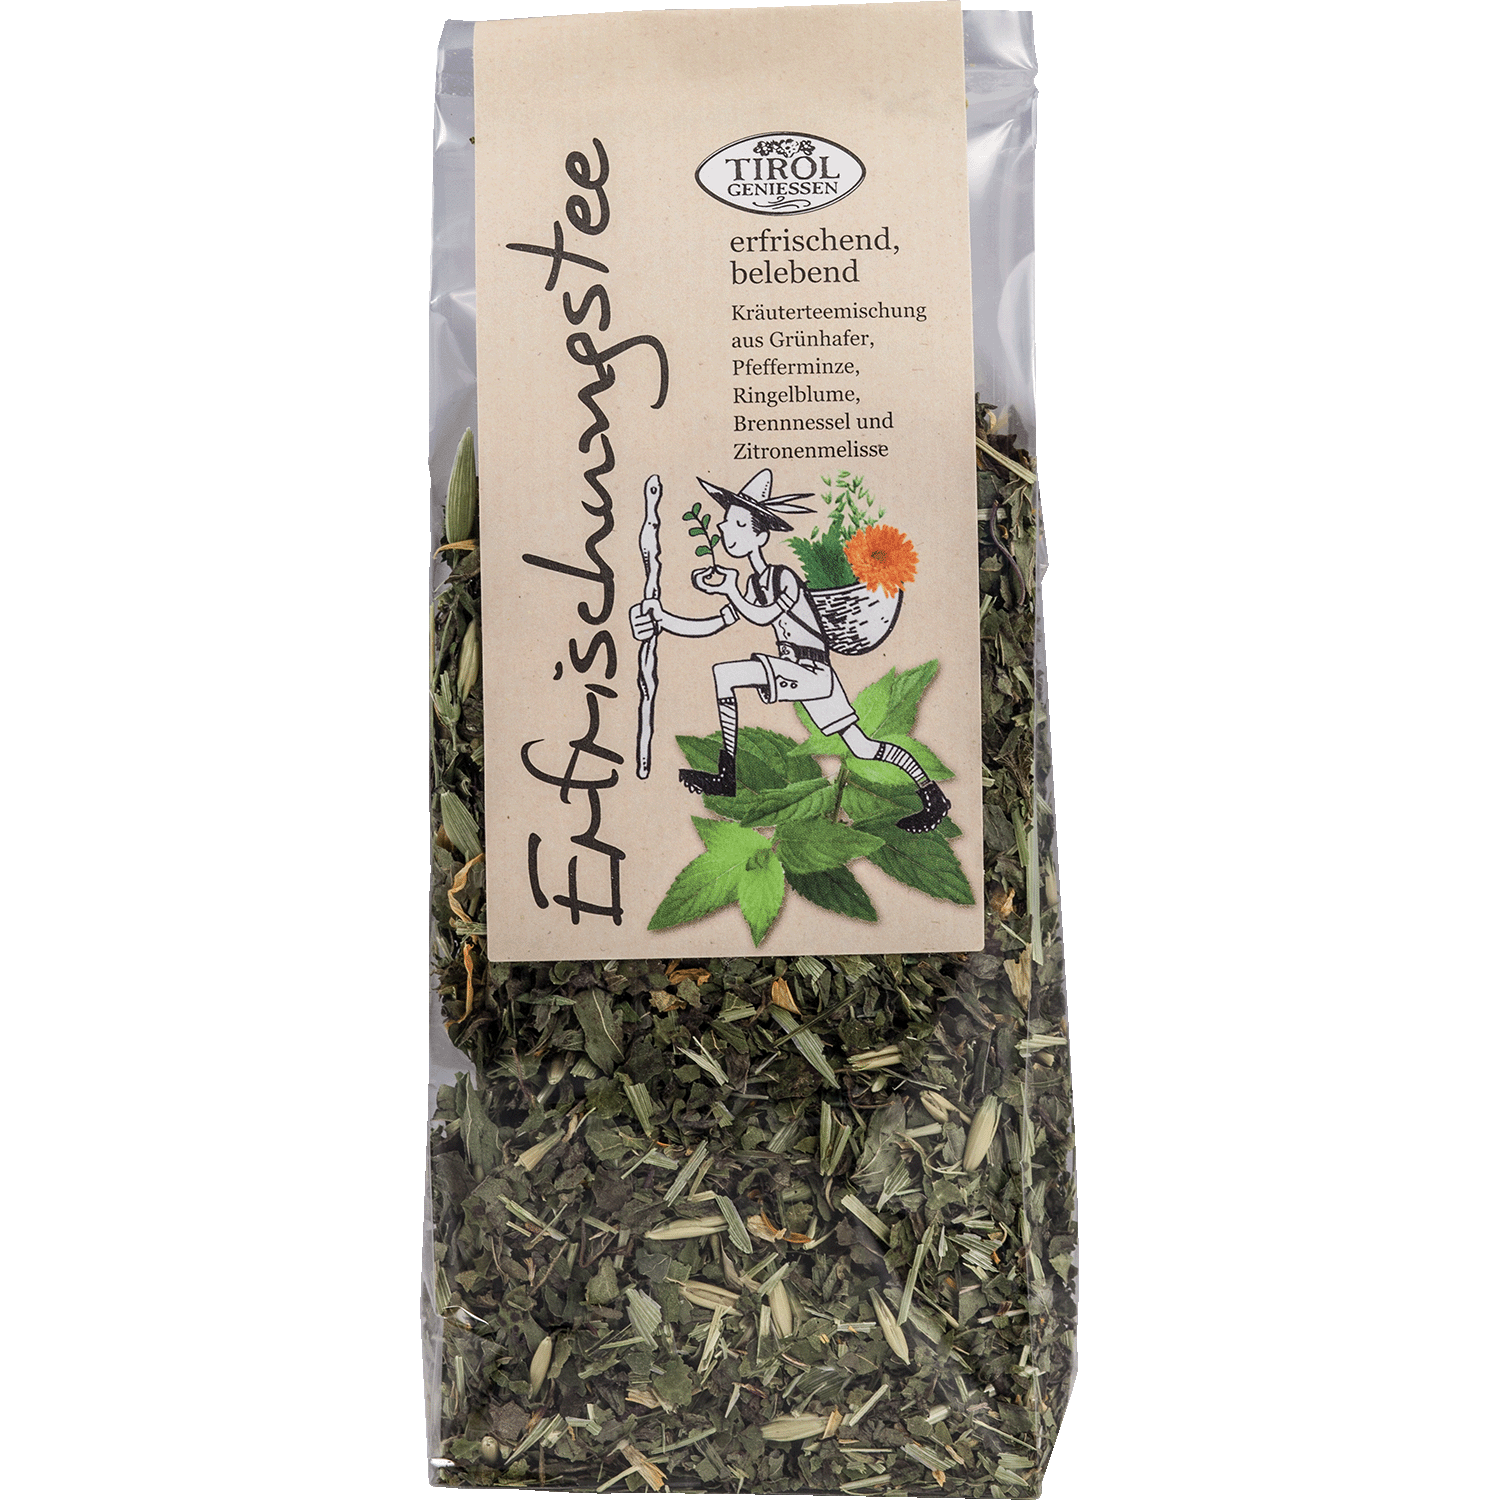 Refreshing Herbal Tea from Austria from Tirol Geniessen